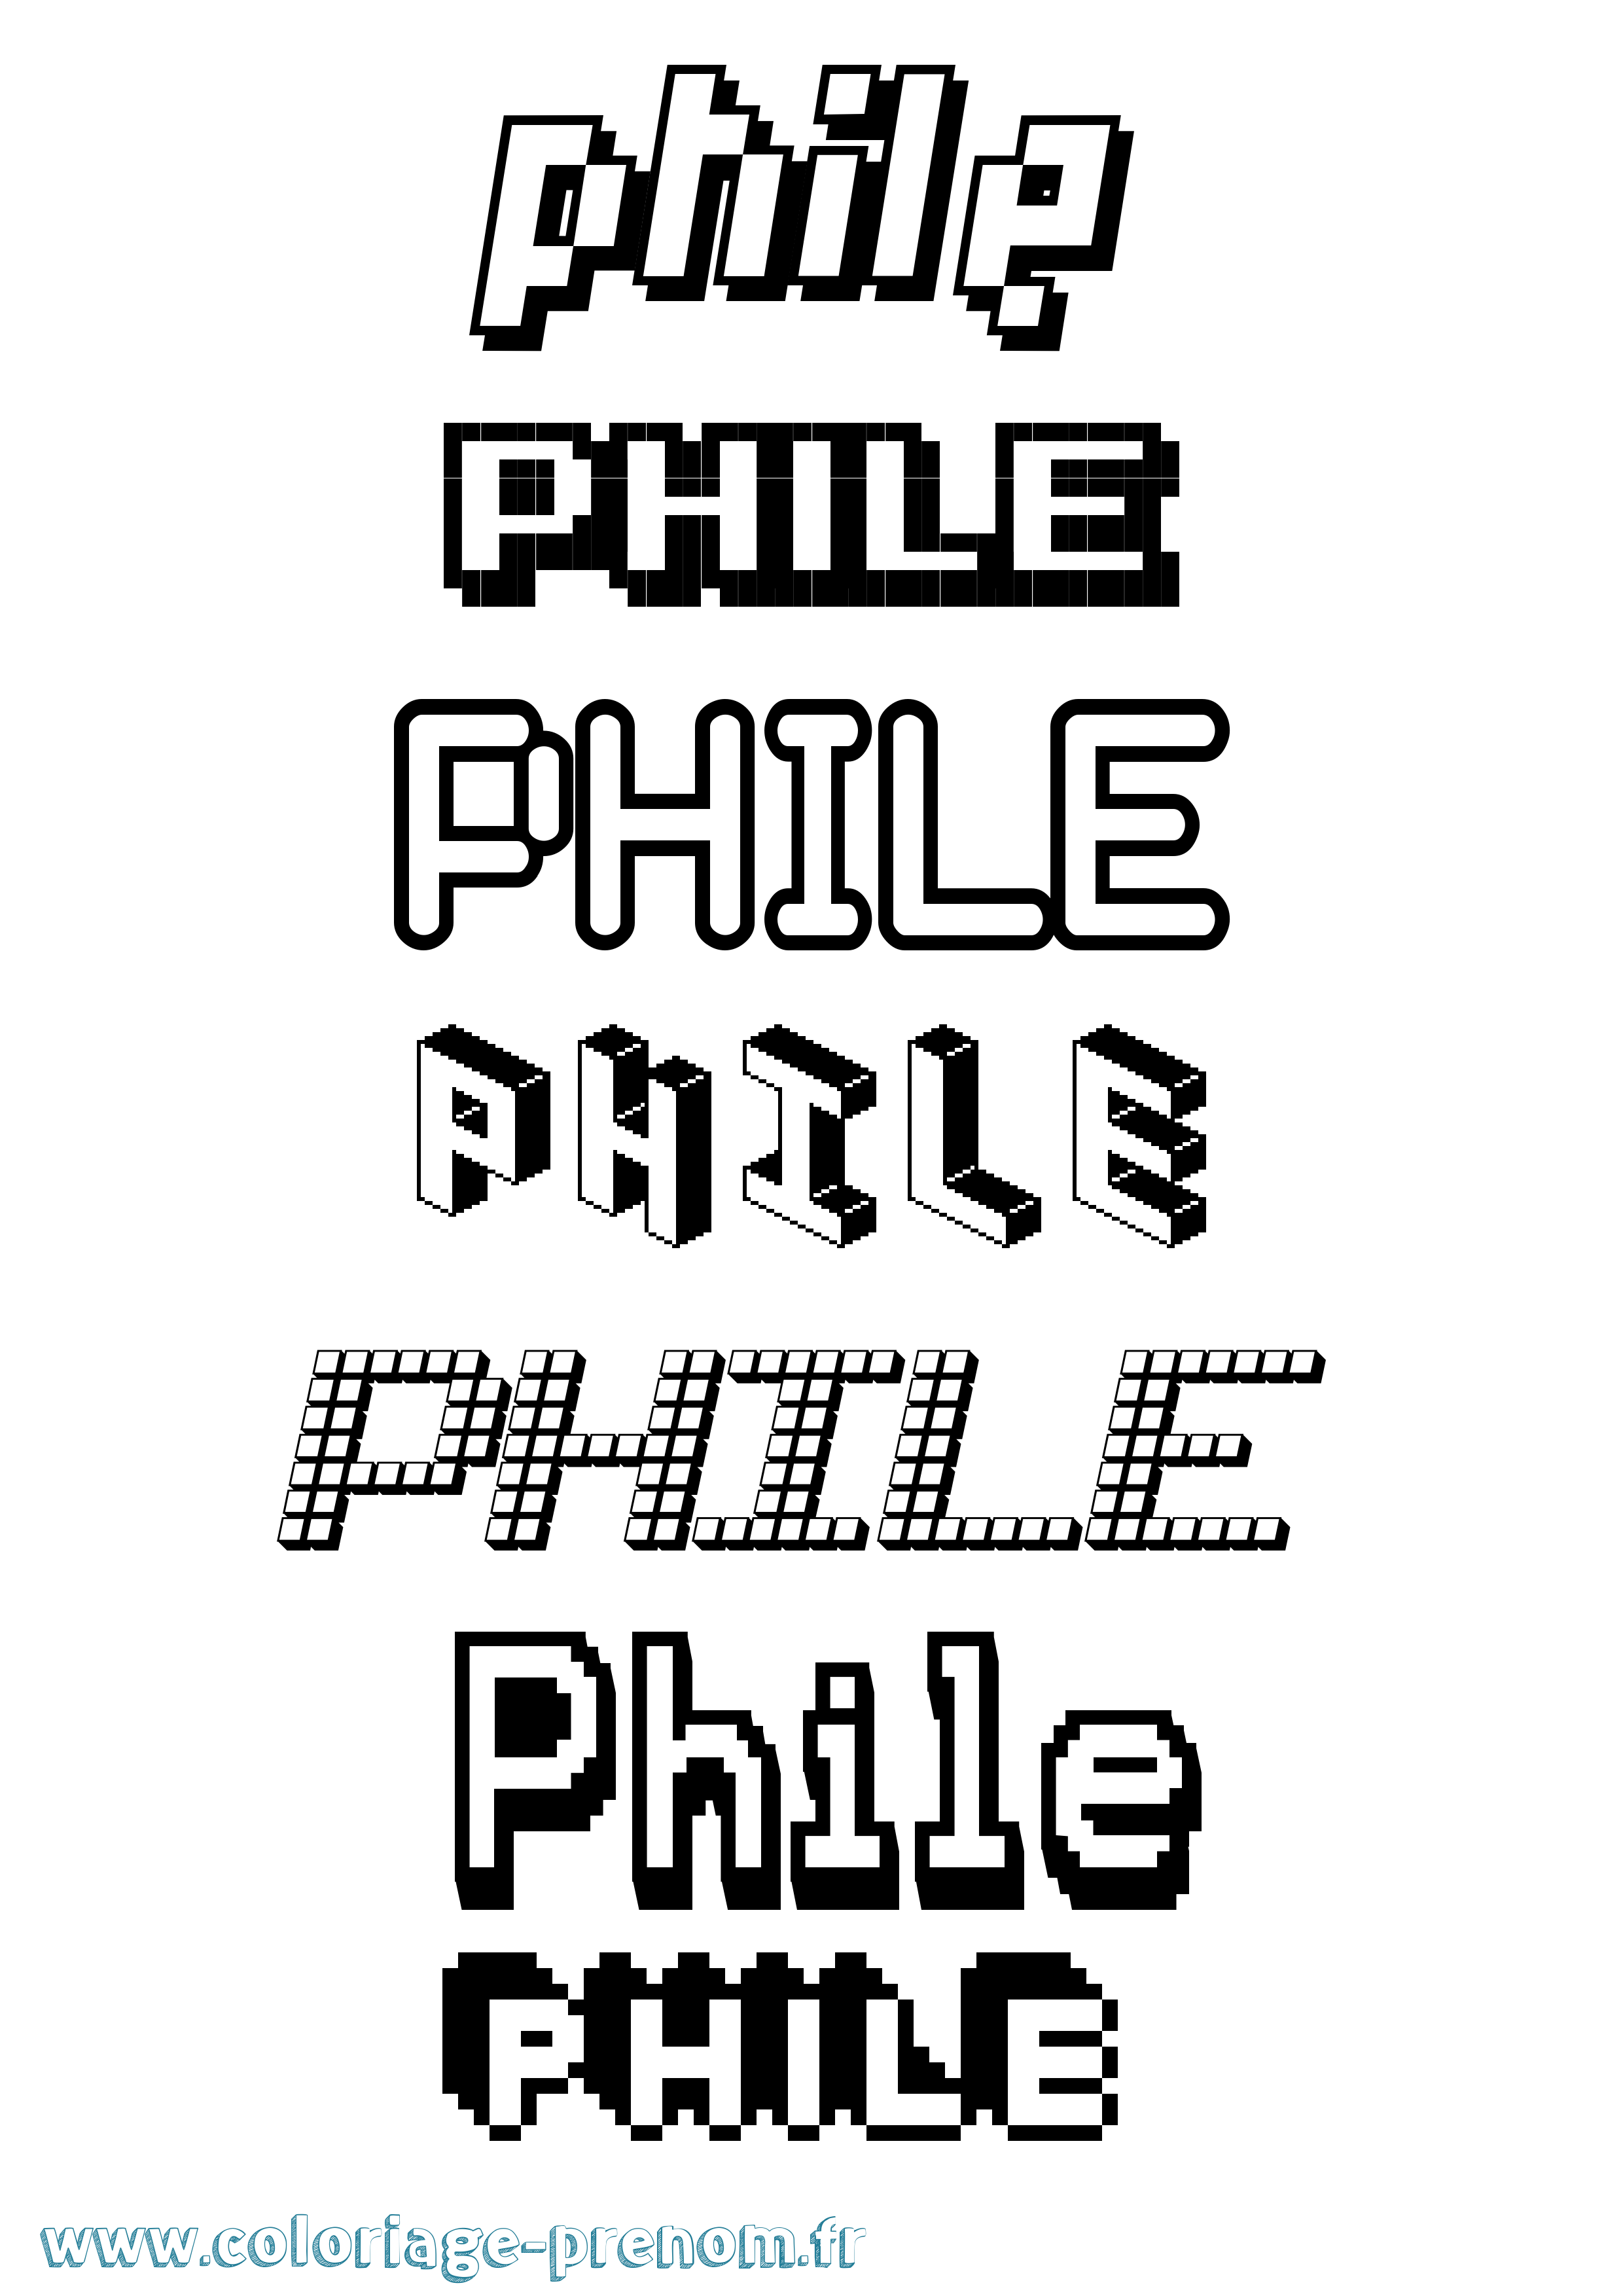 Coloriage prénom Phile Pixel